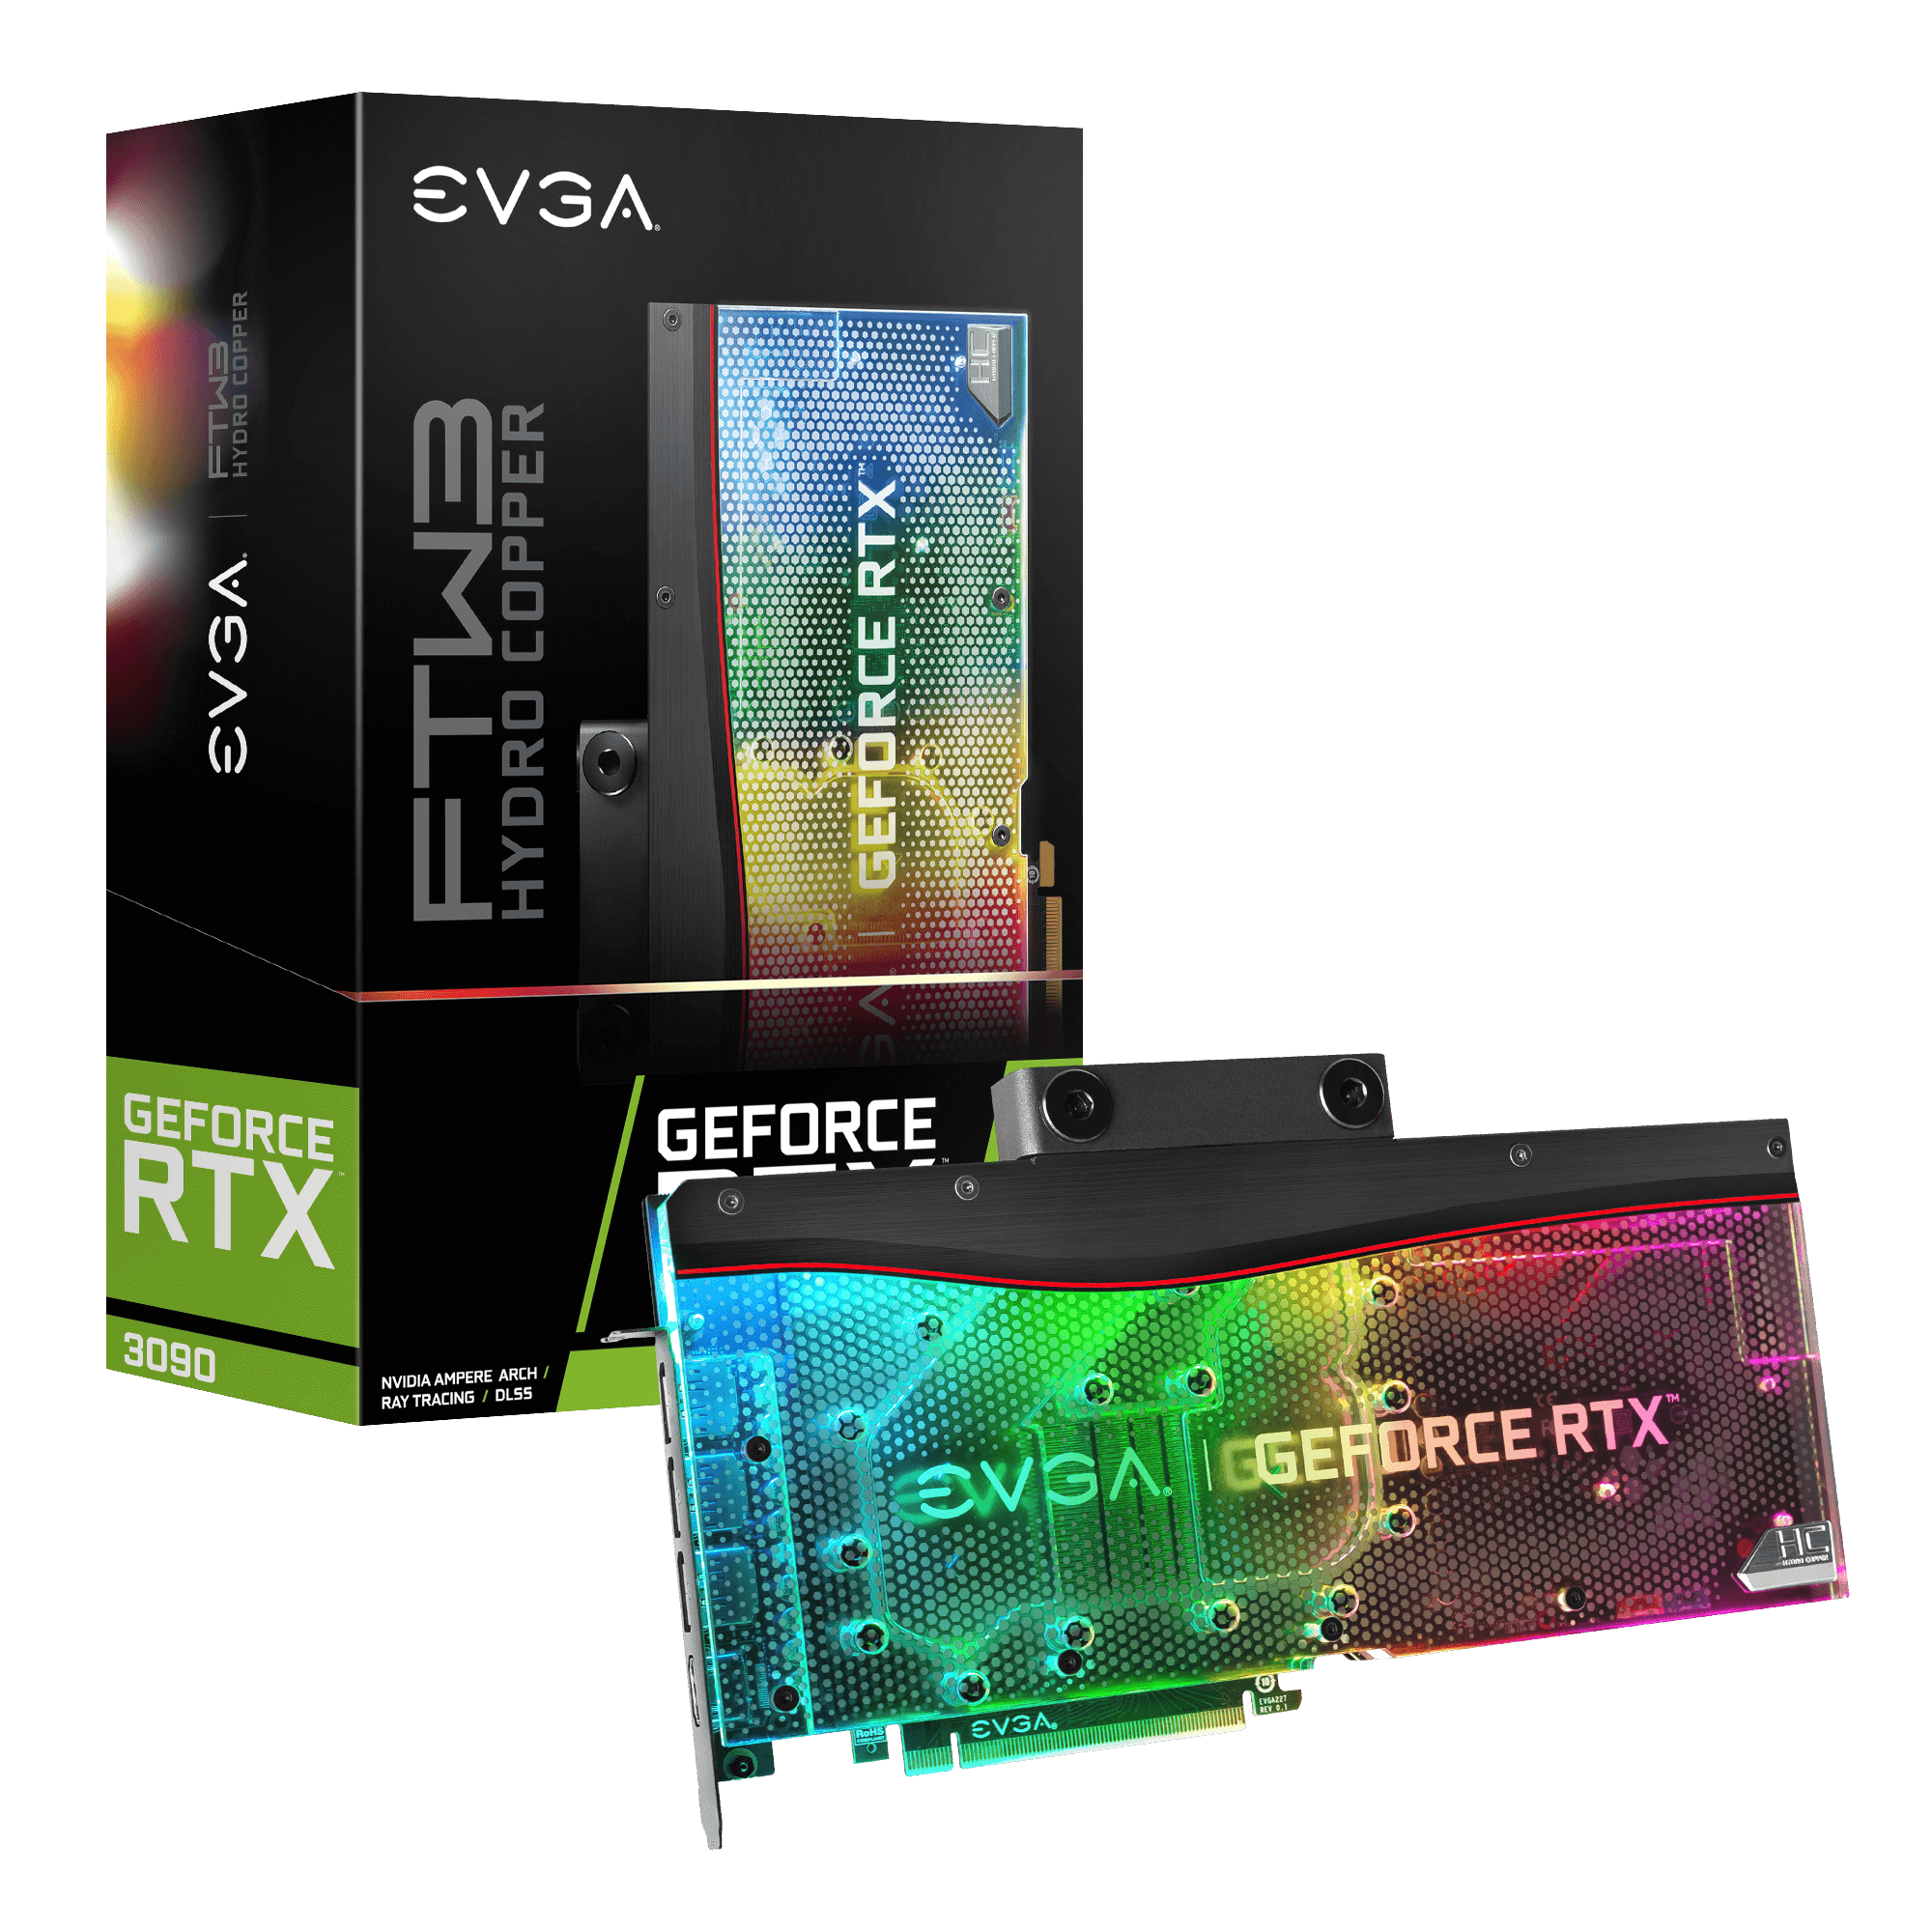 EVGA - Products - EVGA GeForce RTX 3090 FTW3 ULTRA HYDRO COPPER 